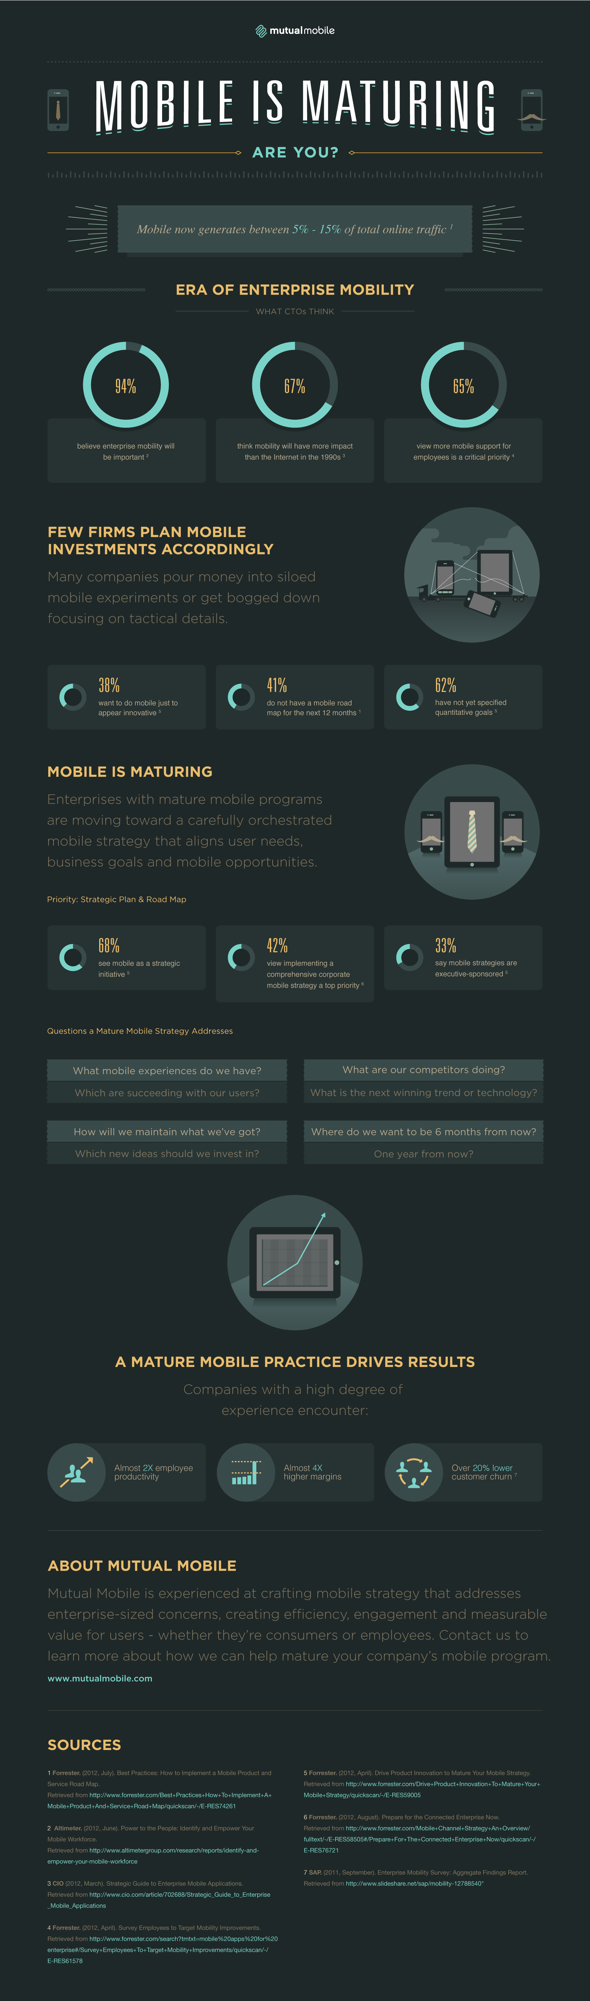 Infographic_MutualMobile_Maturity_2013